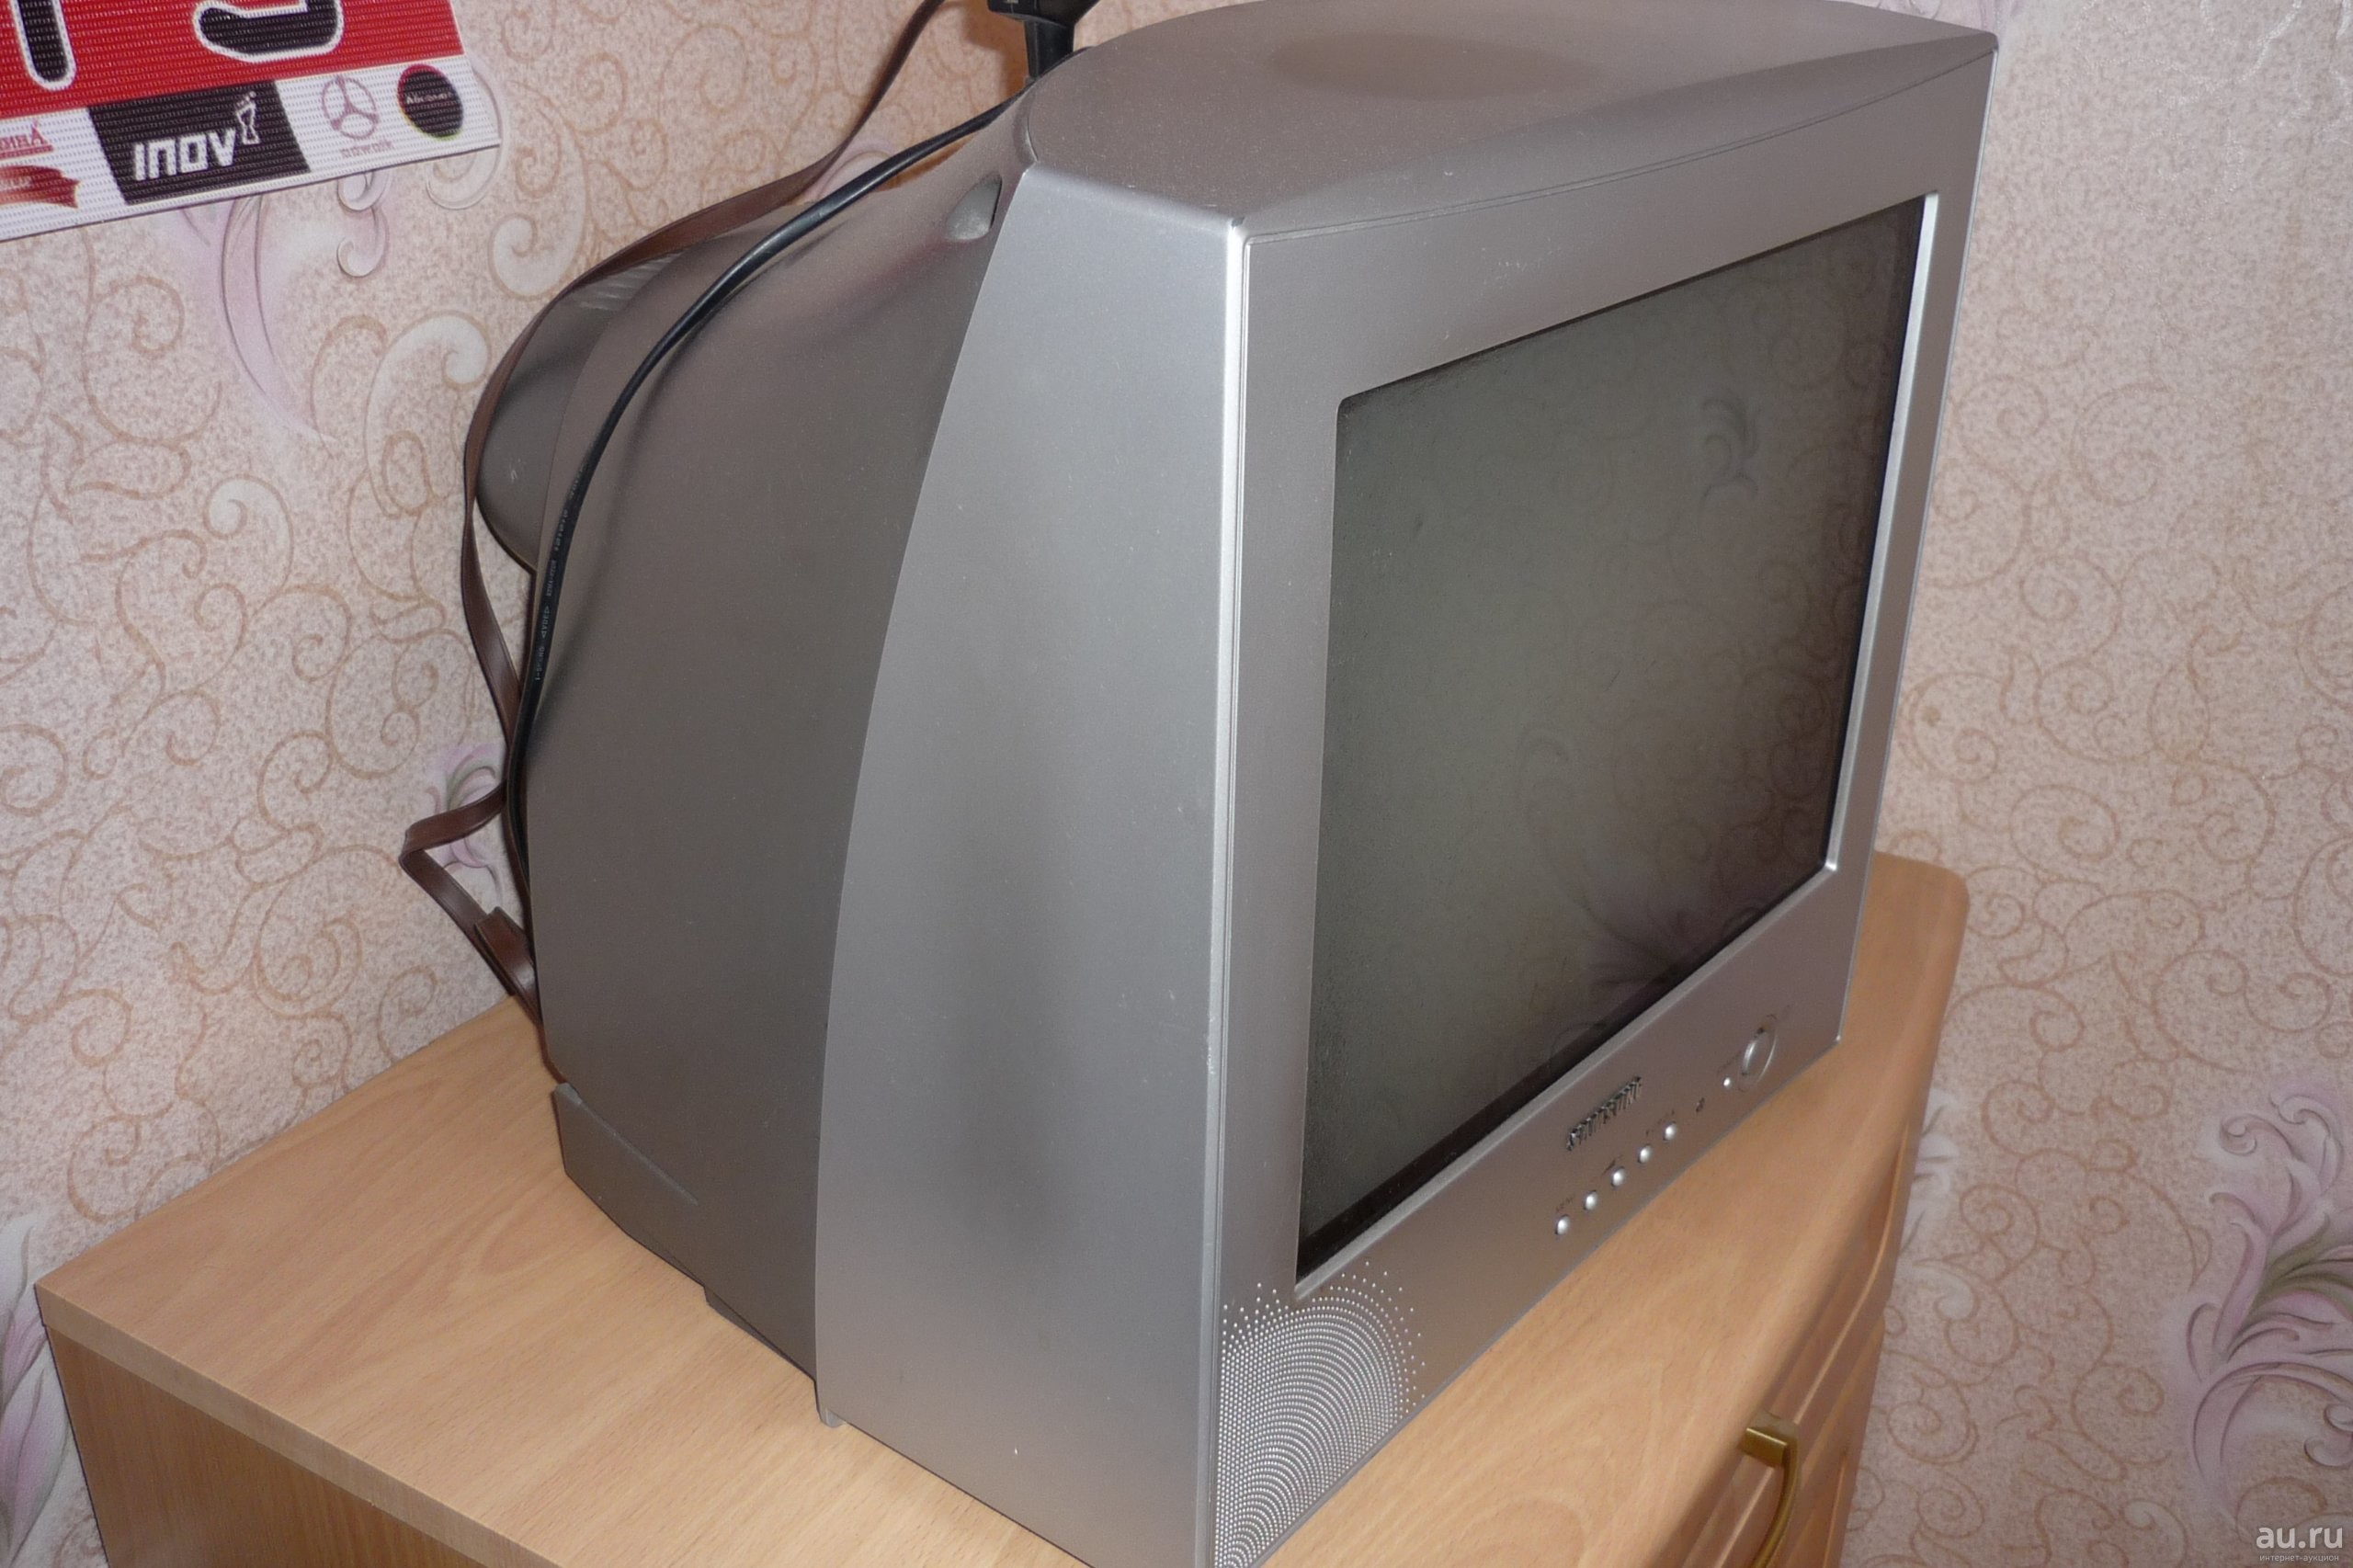 Авито телевизоры 24. Телевизор самсунг старый кинескопный. Samsung 21 дюйм кинескопный. Телевизор Sharp ЭЛТ 21 дюйм. ЭЛТ телевизор Sharp 21 дюймов.